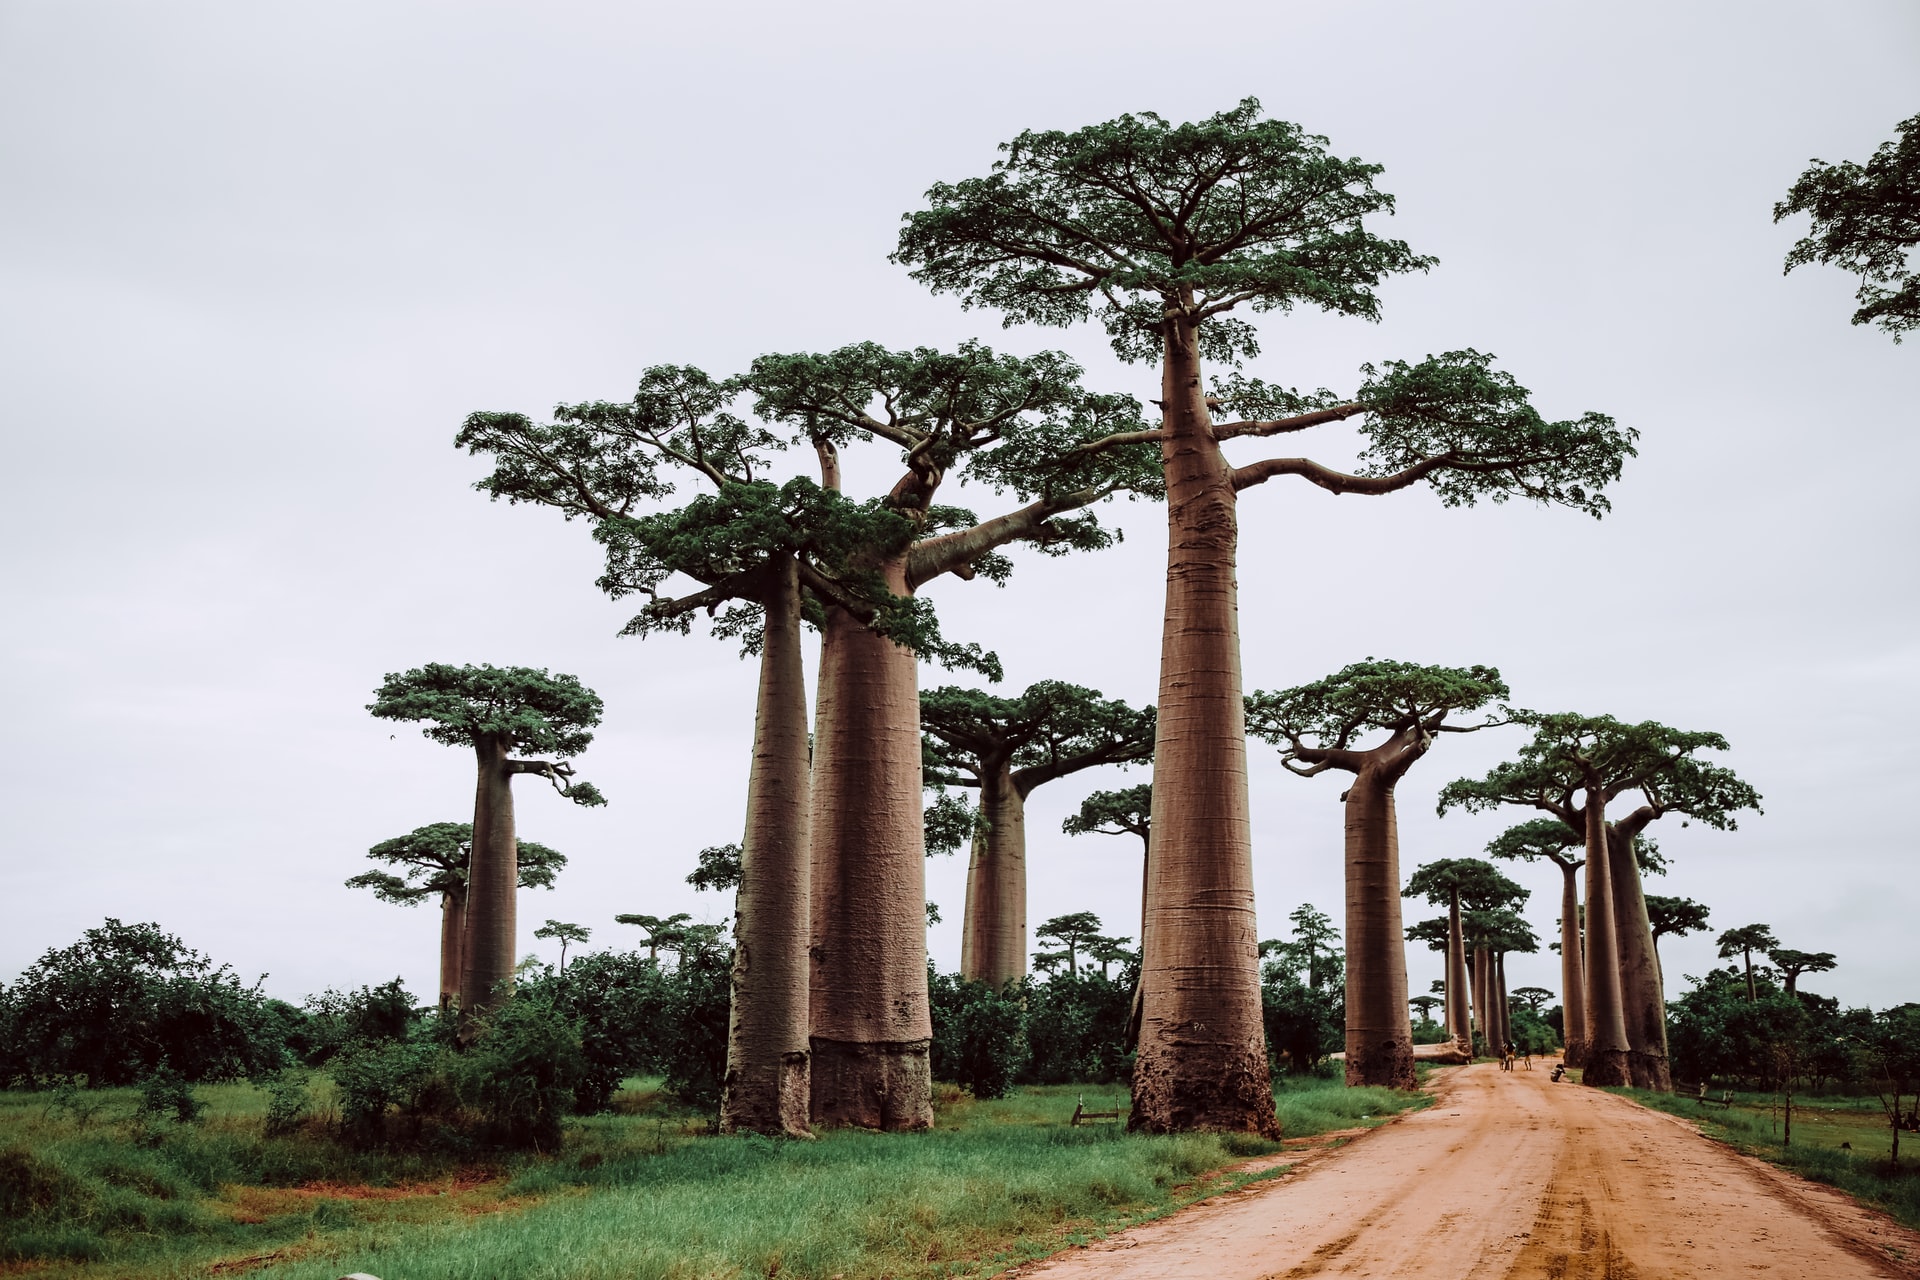 Африка остров Мадагаскар